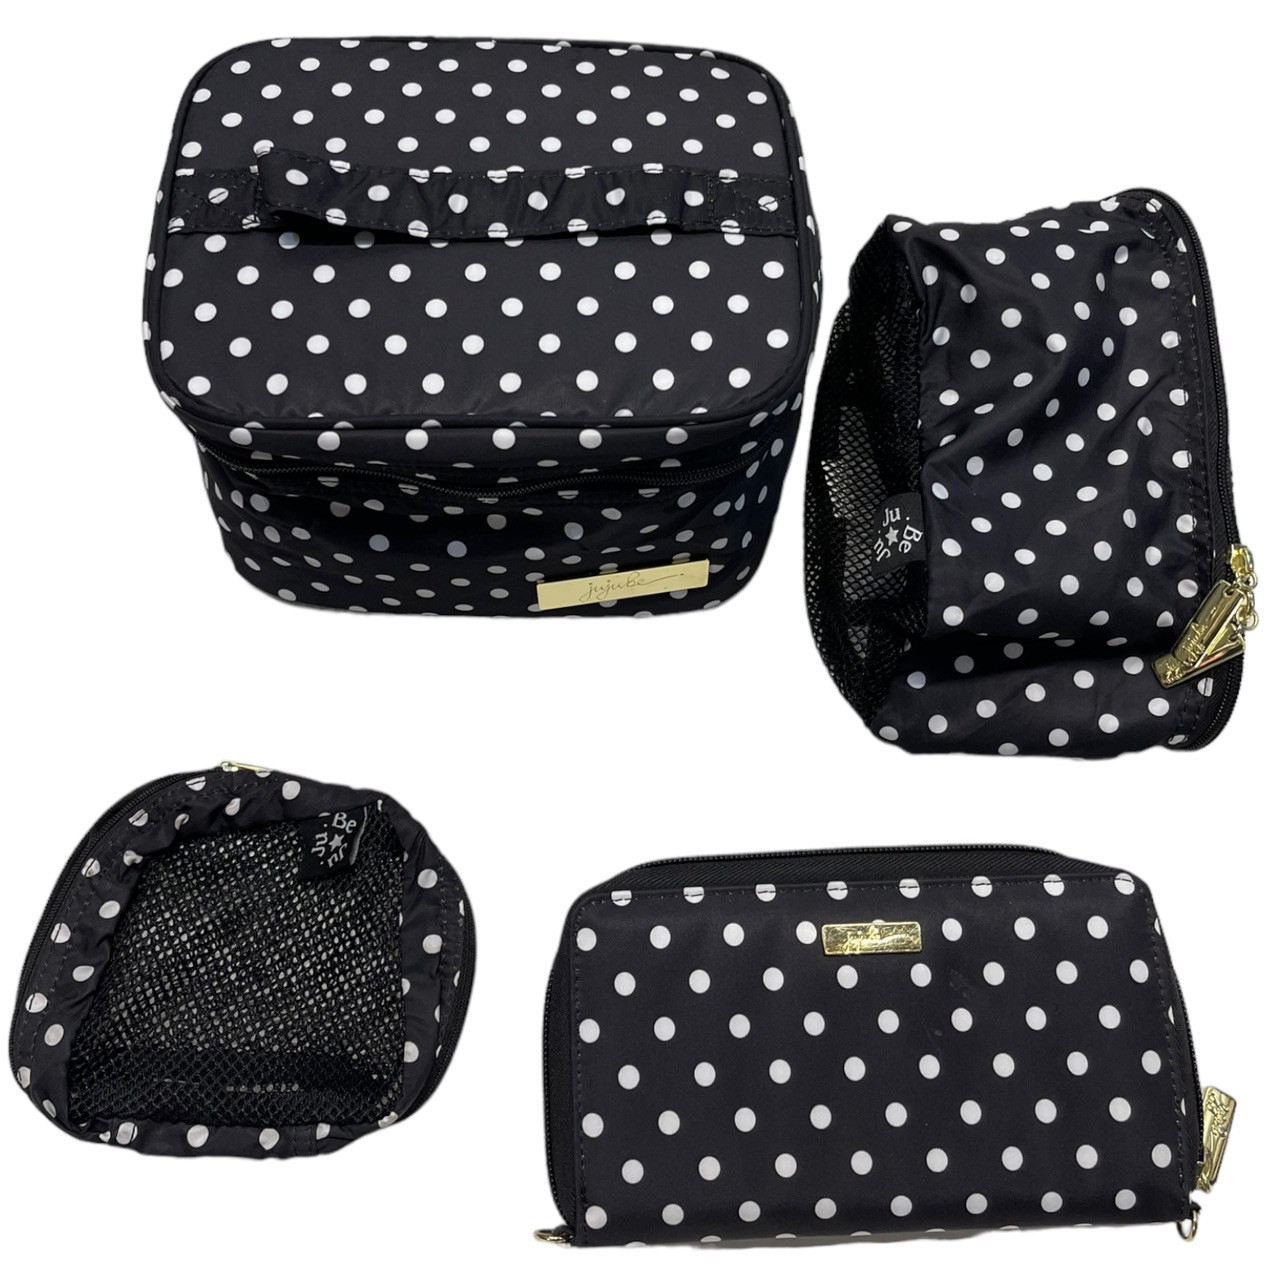 JuJuBe Black Polka Dot The Duchess Diaper Bag Accessories